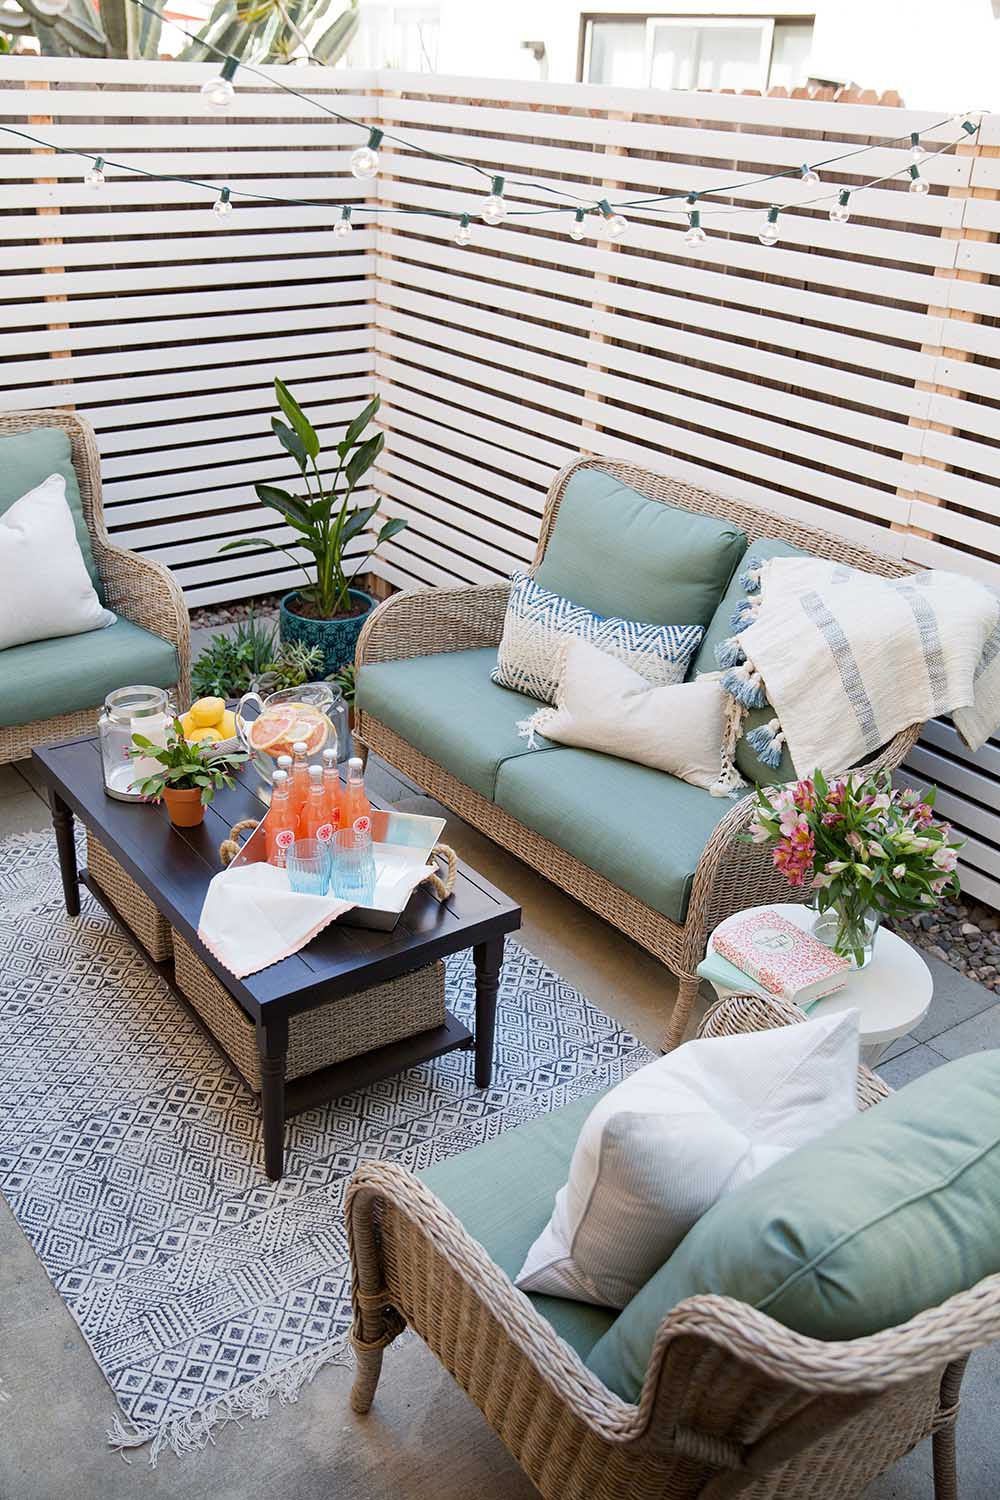 25 Colorful Backyard Decor Ideas to Refresh Your Porch or Patio